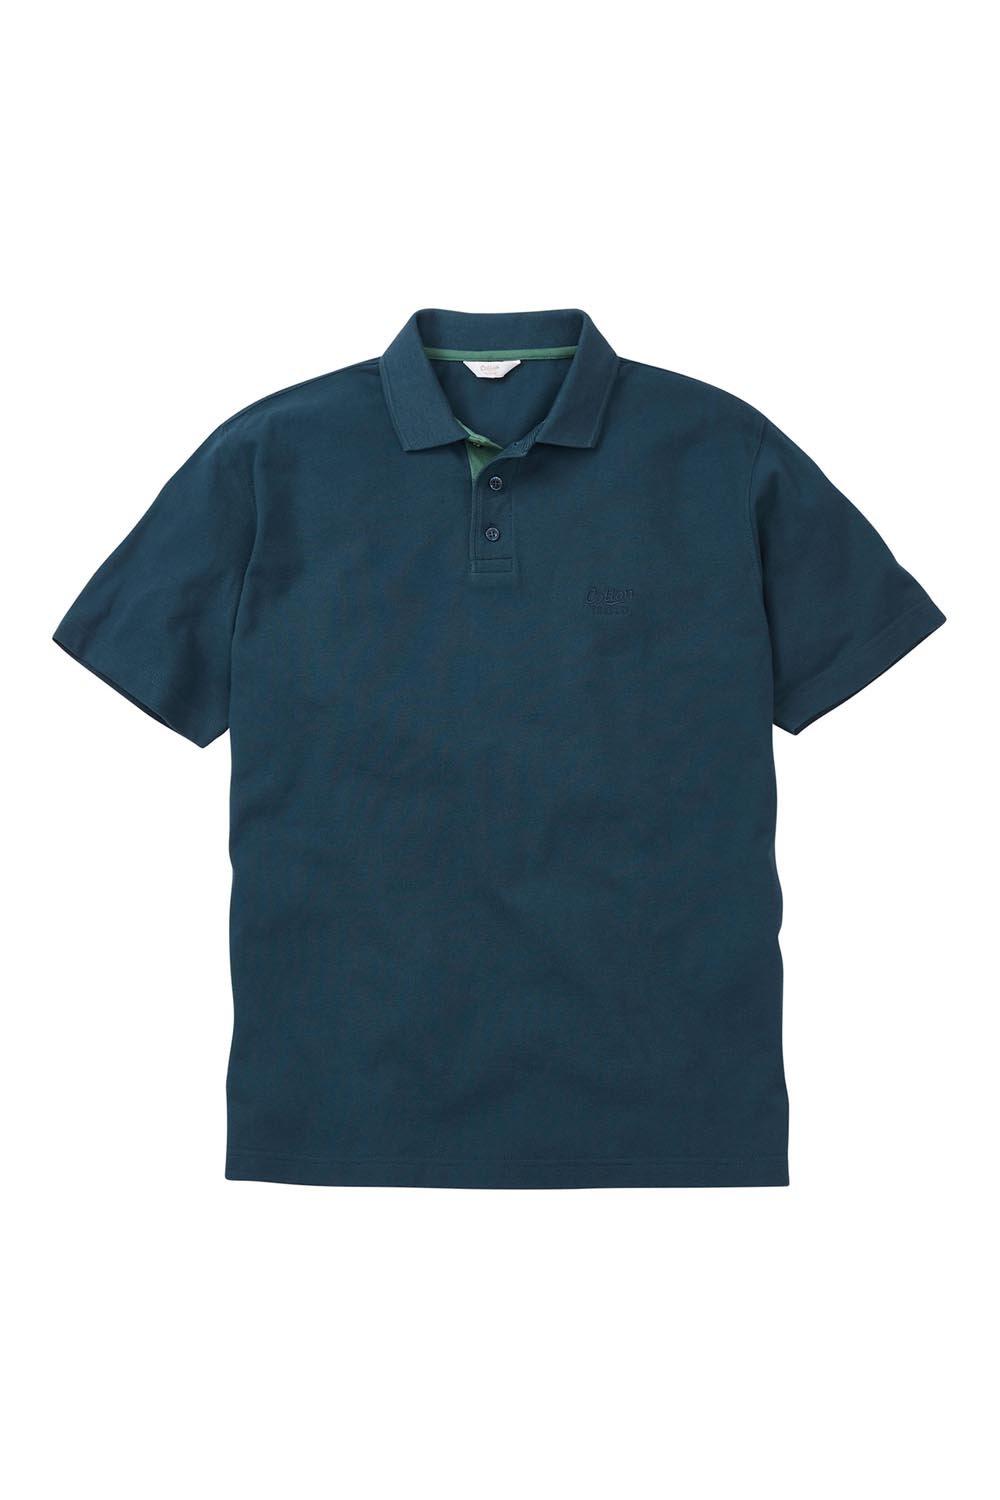 Рубашка поло с коротким рукавом Cotton Traders, зеленый